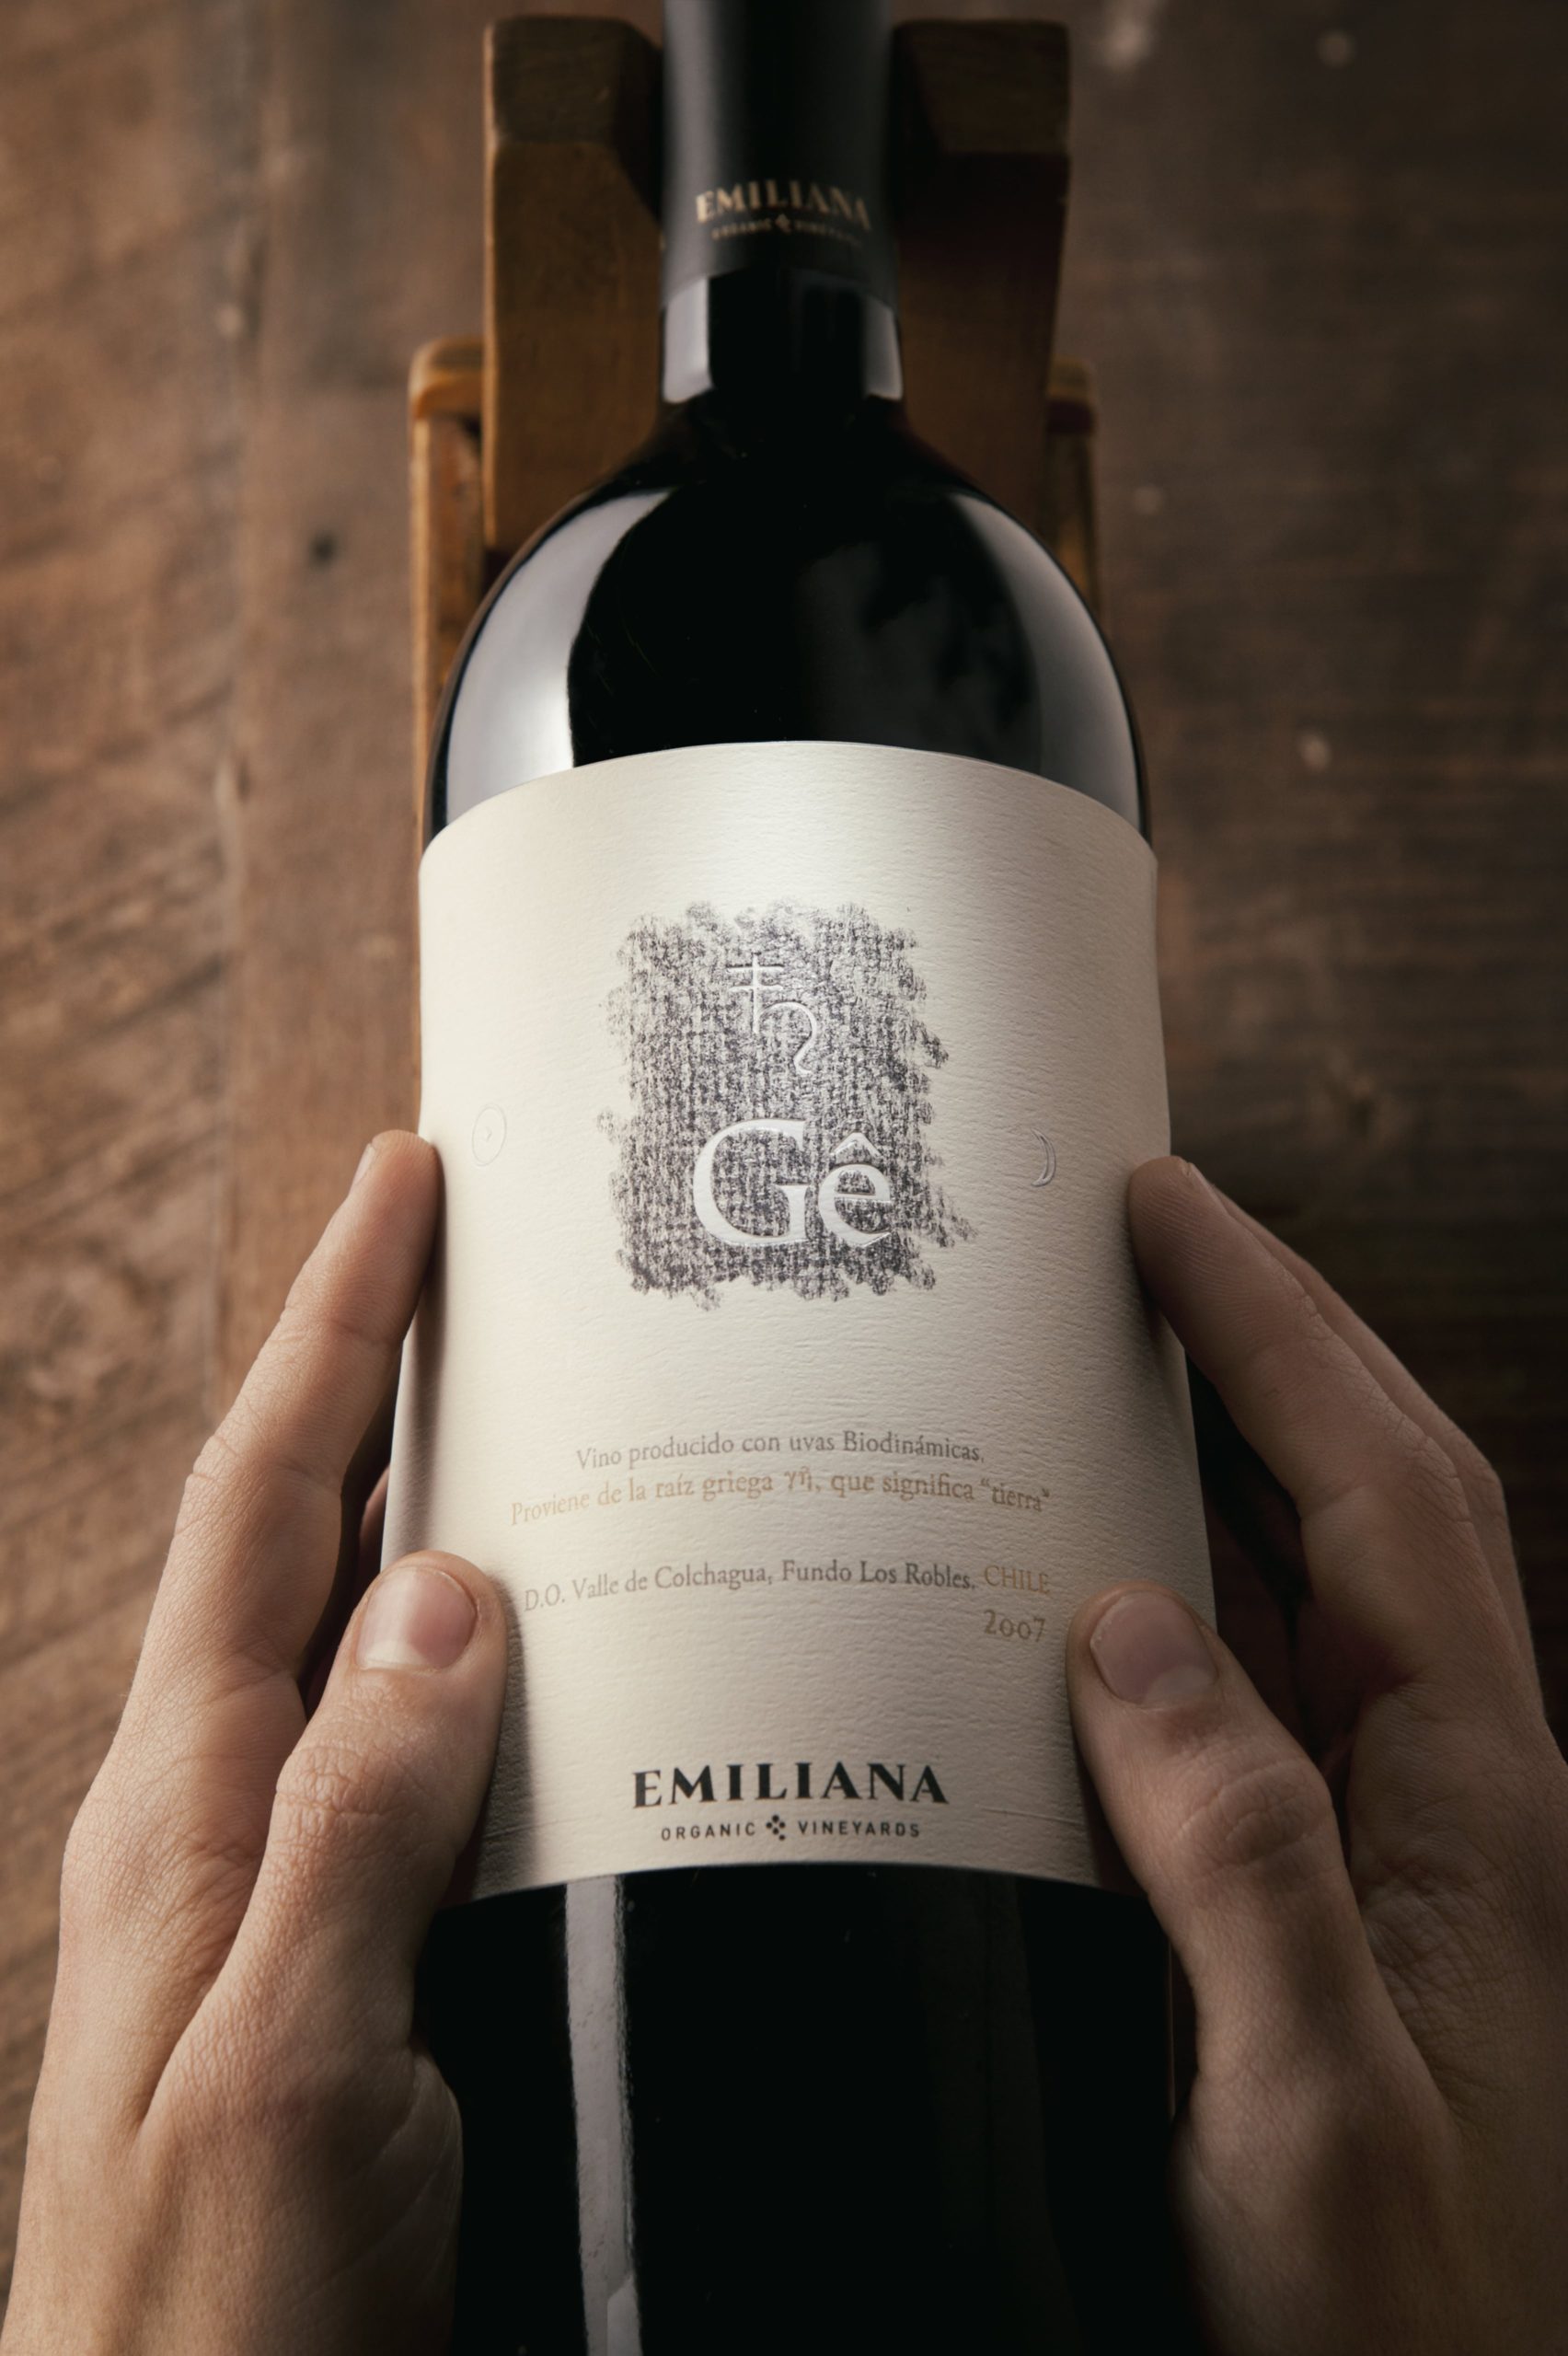 HISTORY – Emiliana – Organic Vineyards